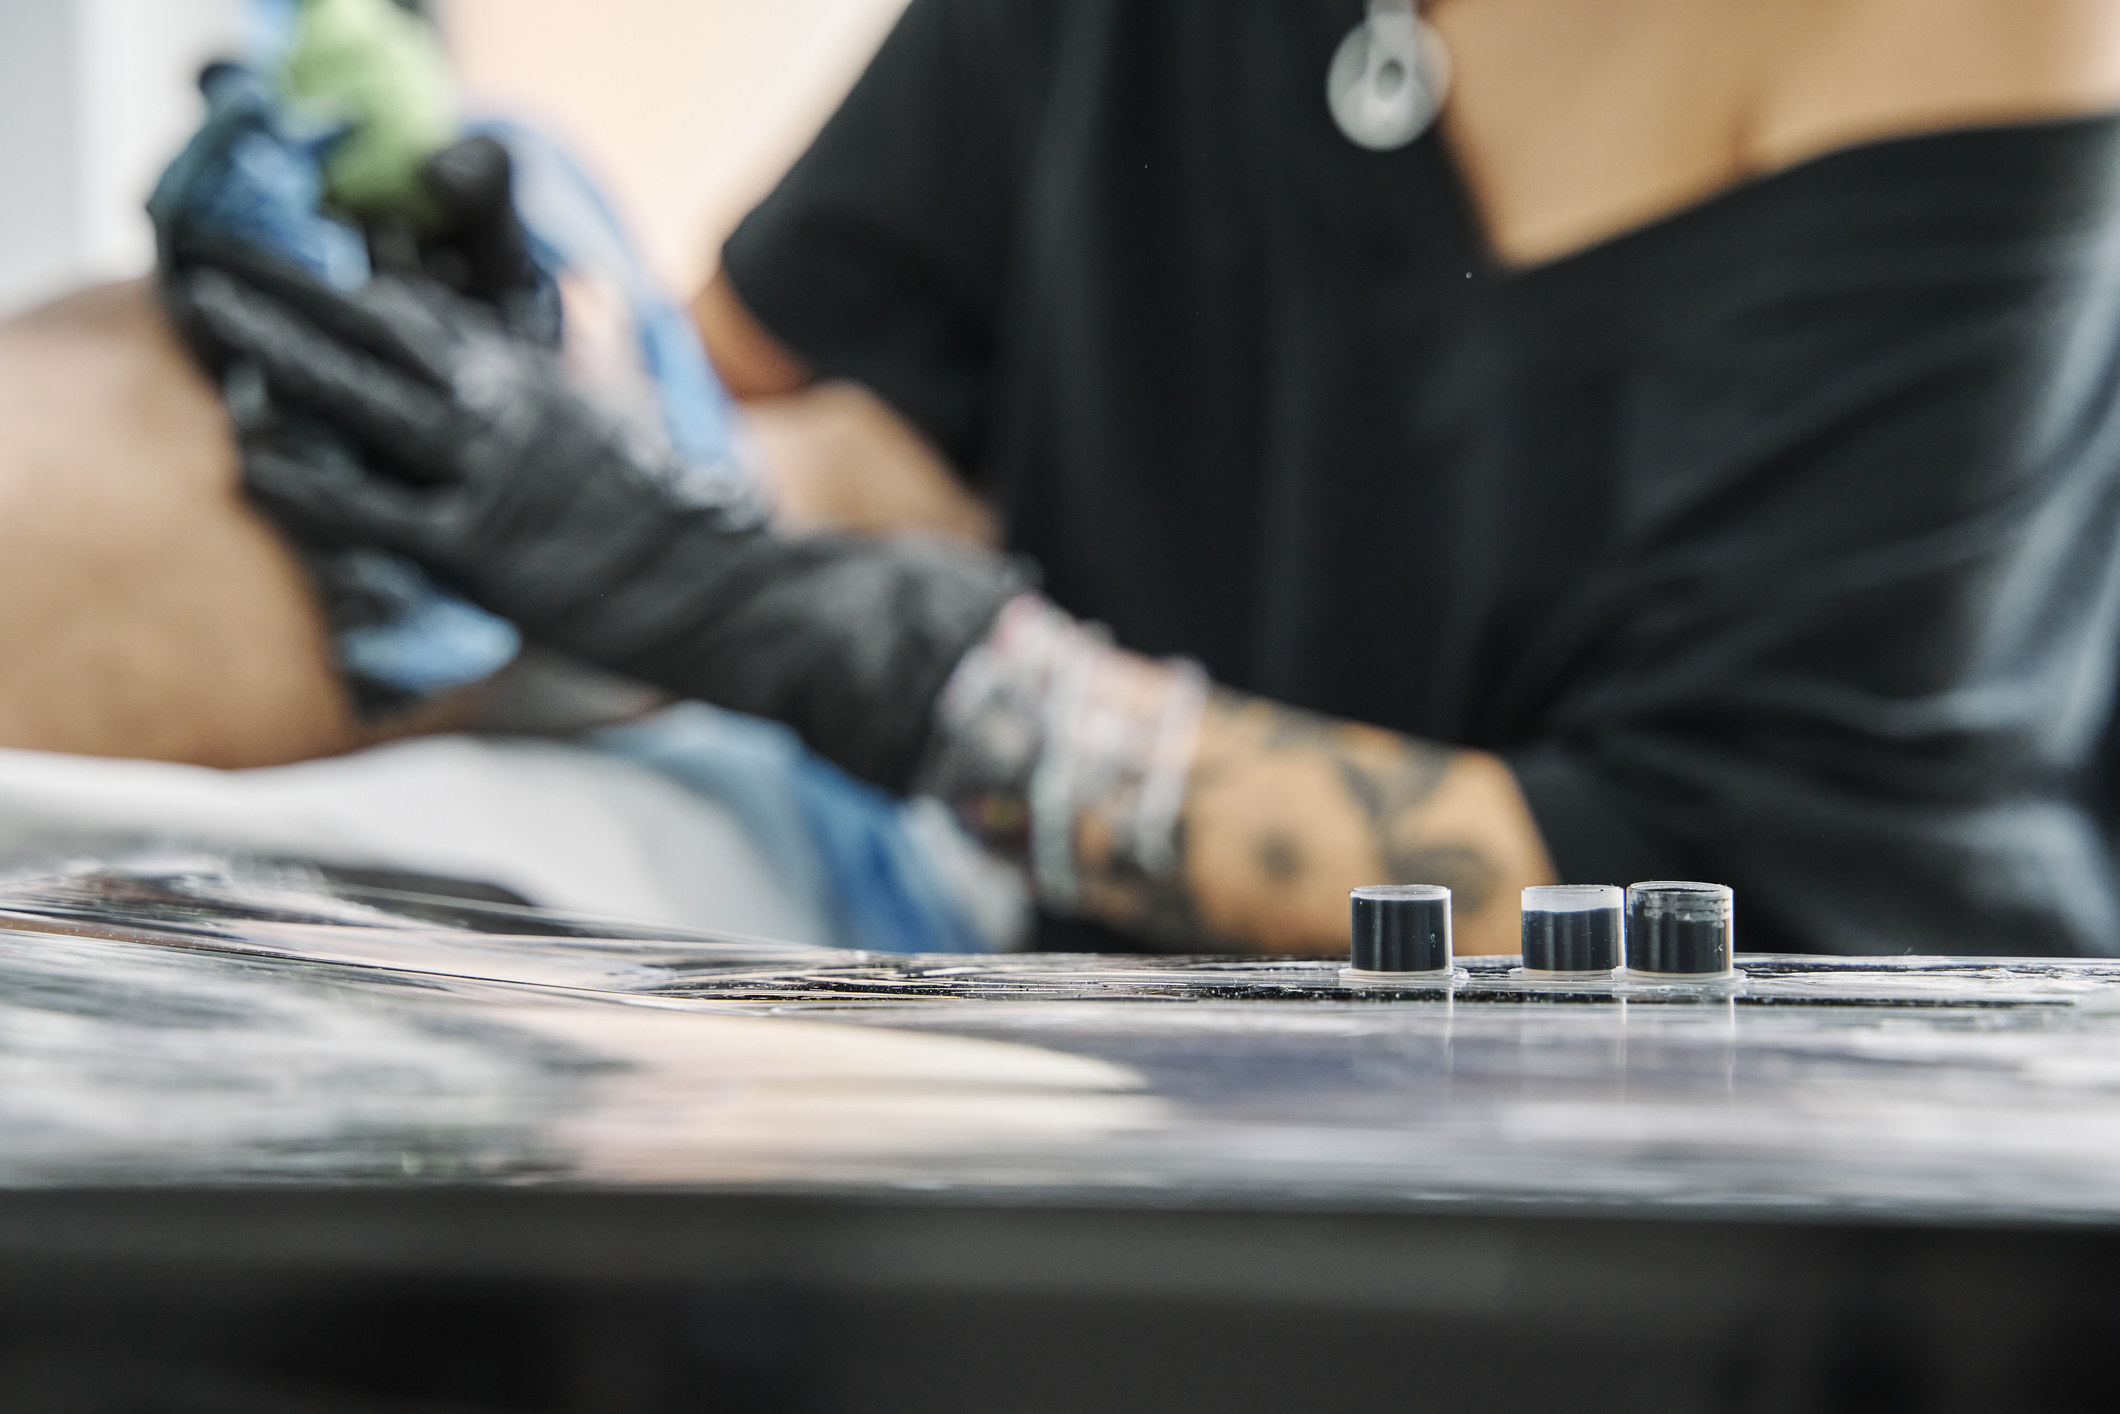 A tattoo artist working on a client